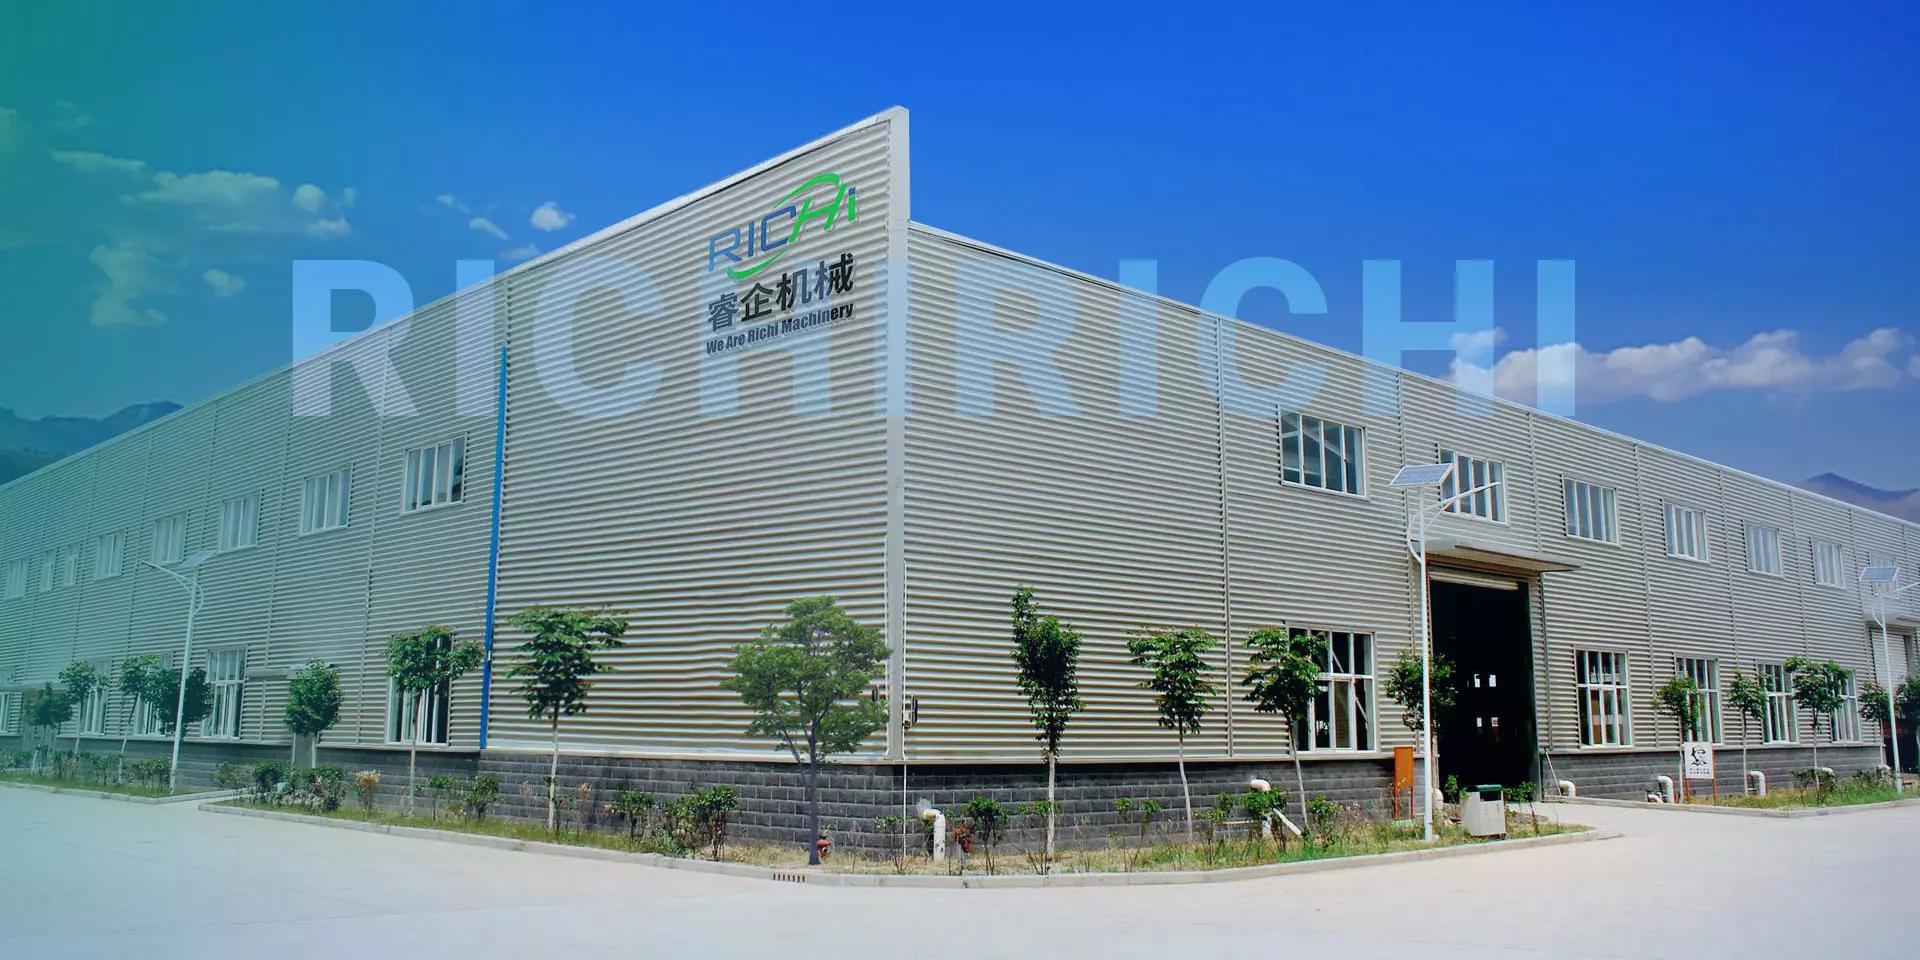 RICHI pellet machine factory